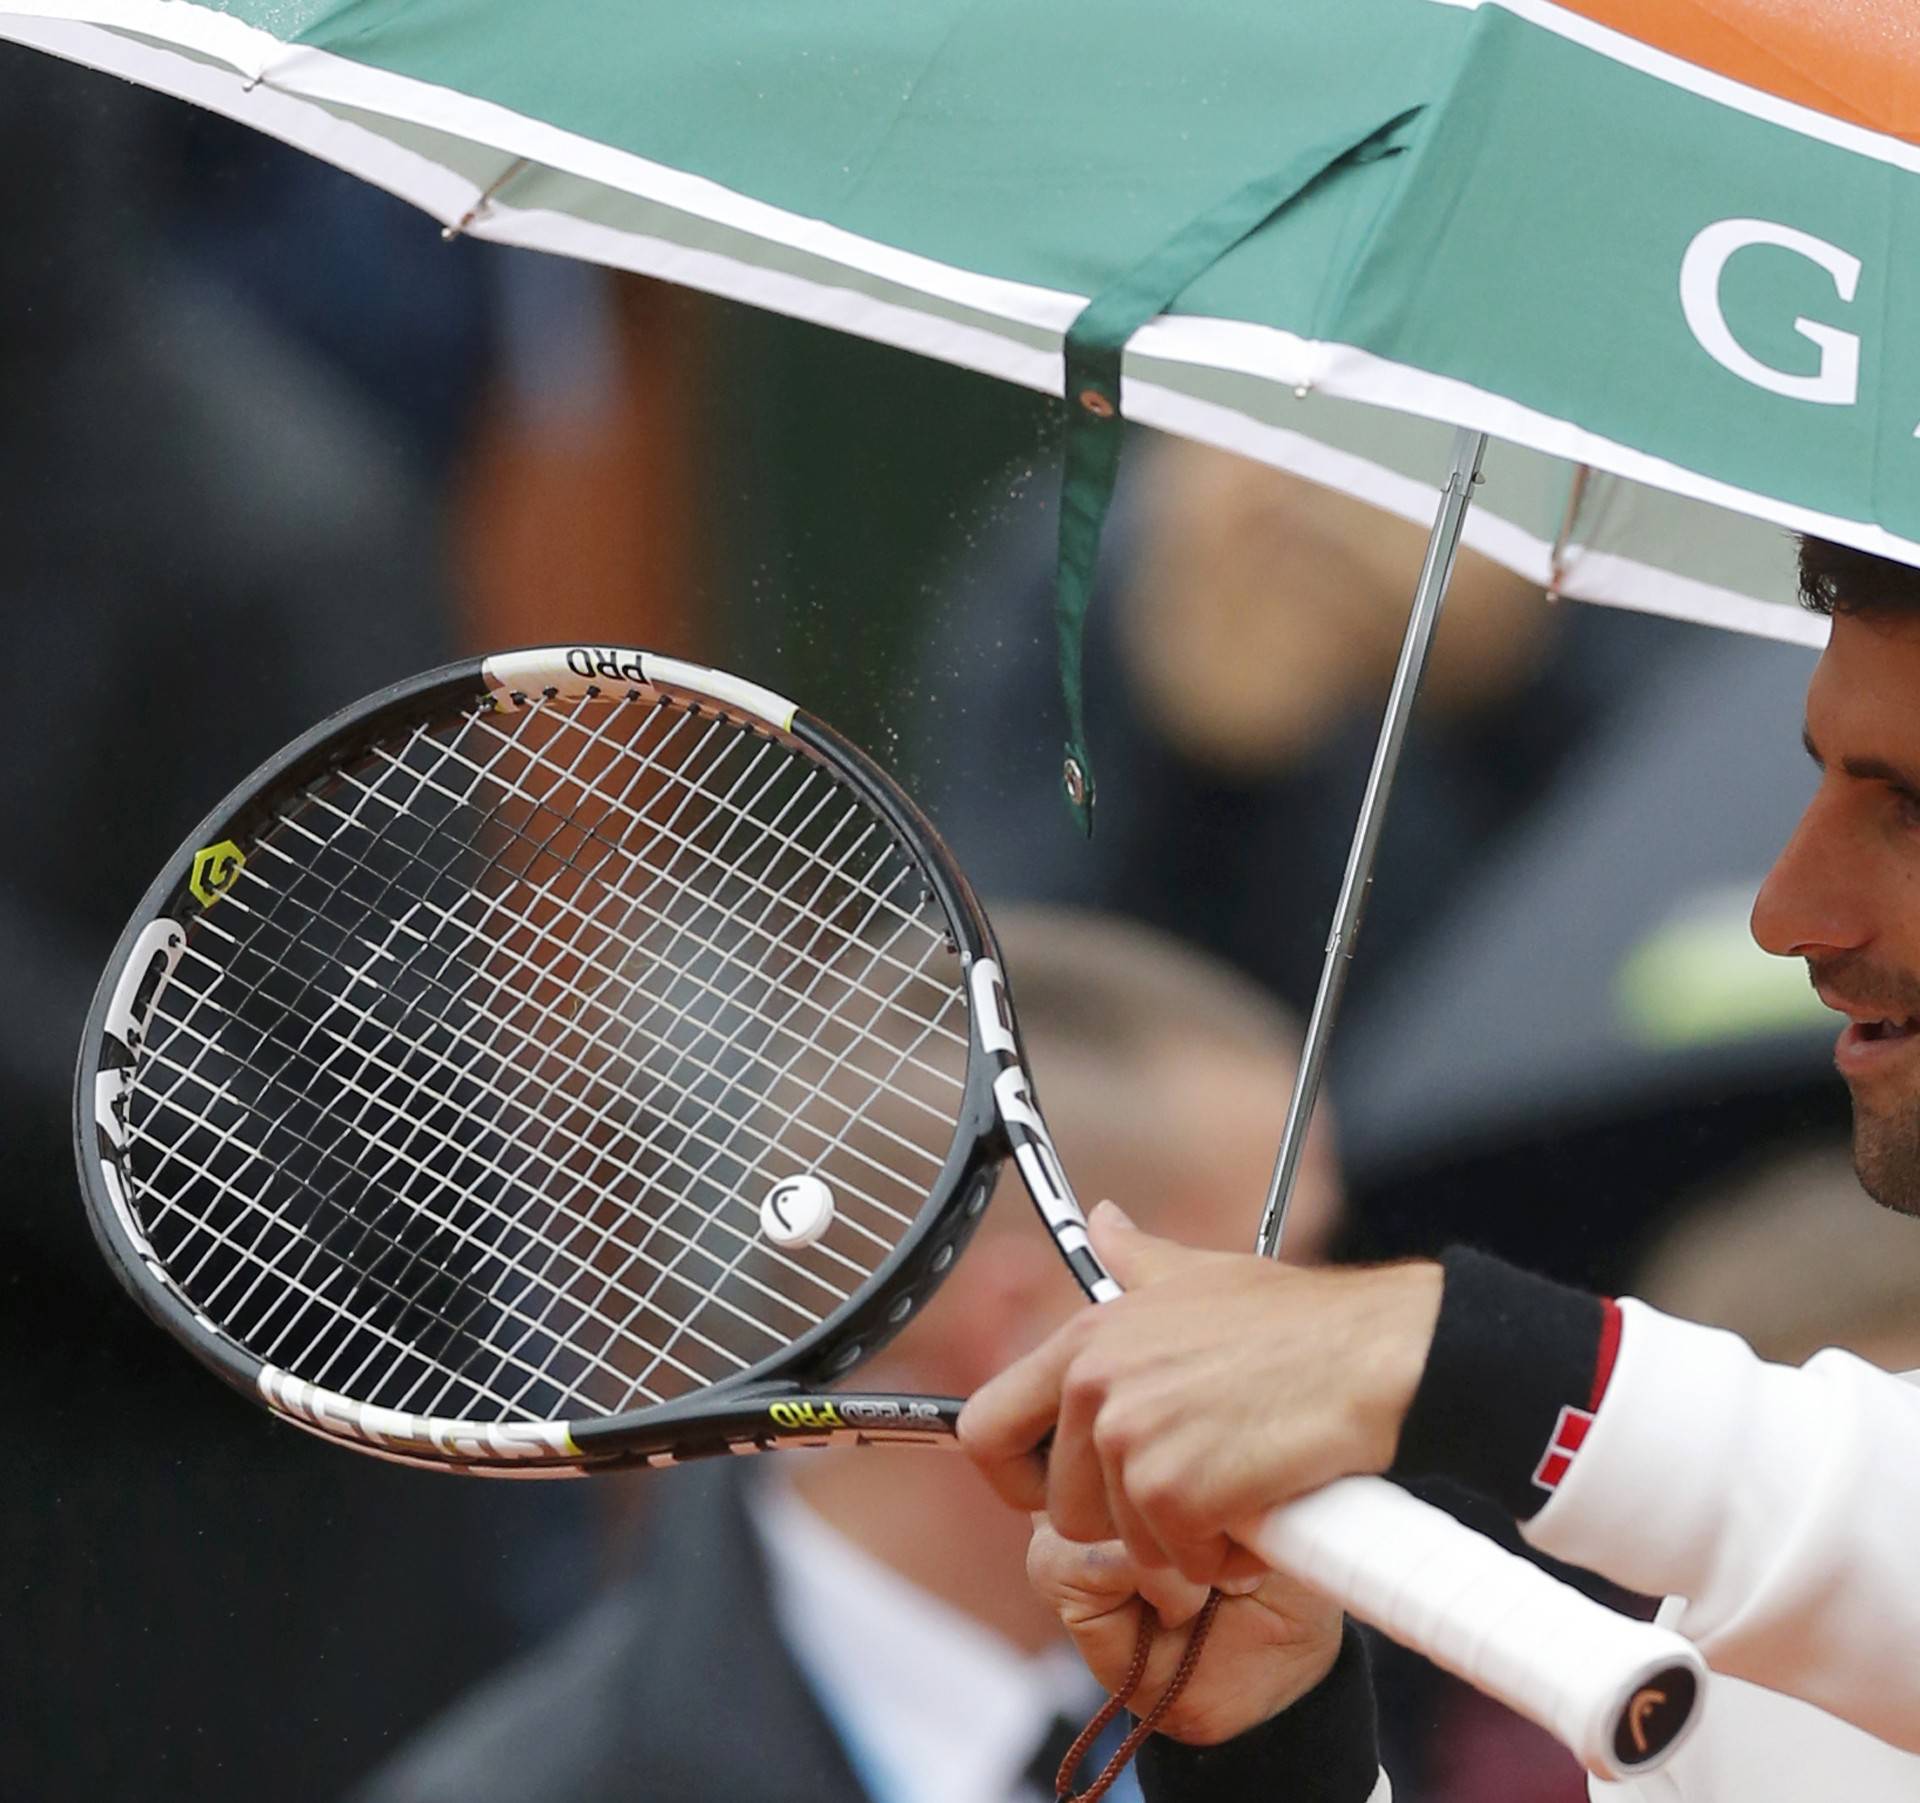 Tennis - French Open - Roland Garros - Novak Djokovic of Serbia v Roberto Bautista Agut of Spain